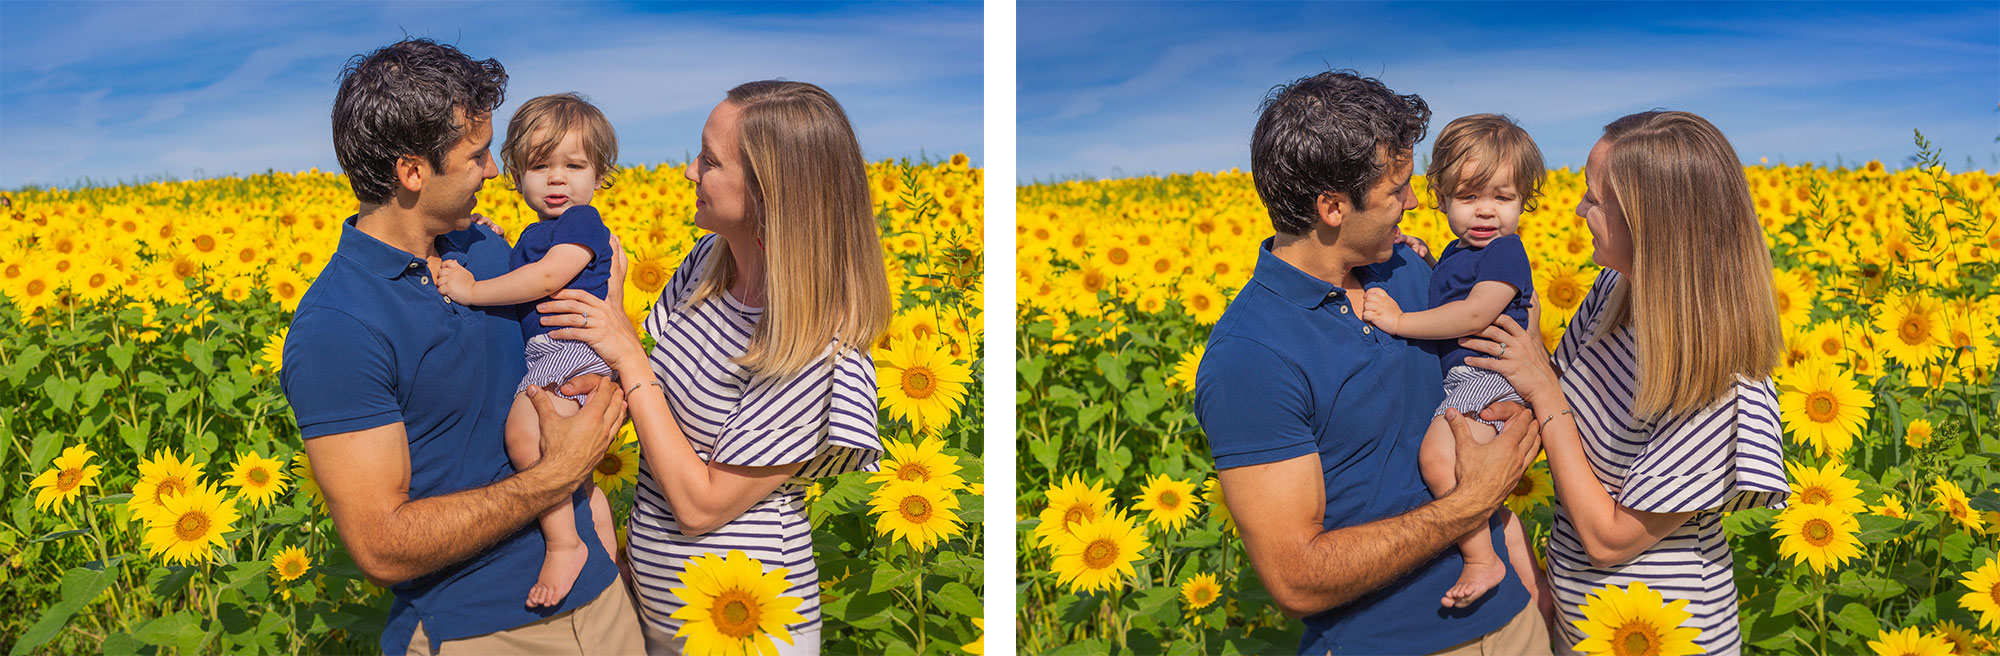 colby-farm-sunflowers-family-portraits-stephen-grant-photography-010.jpg